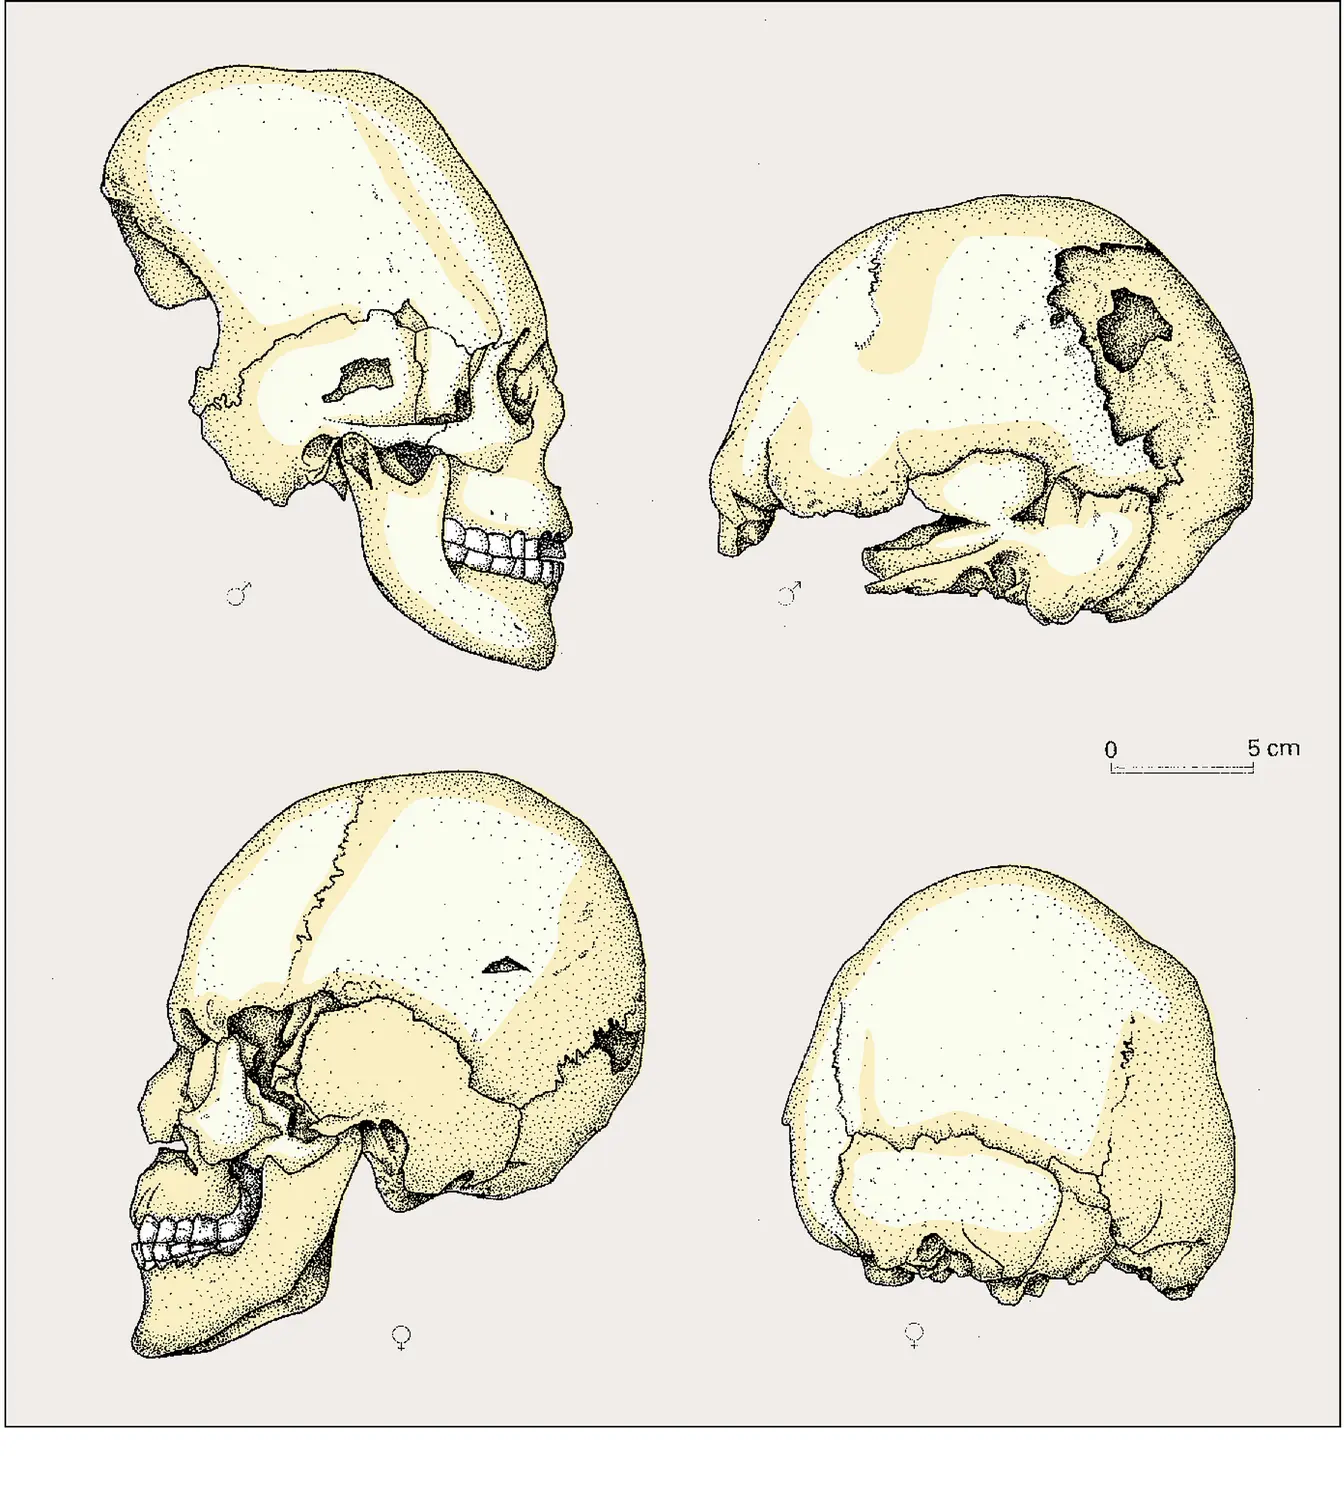 Exemples de crânes déformés (1)